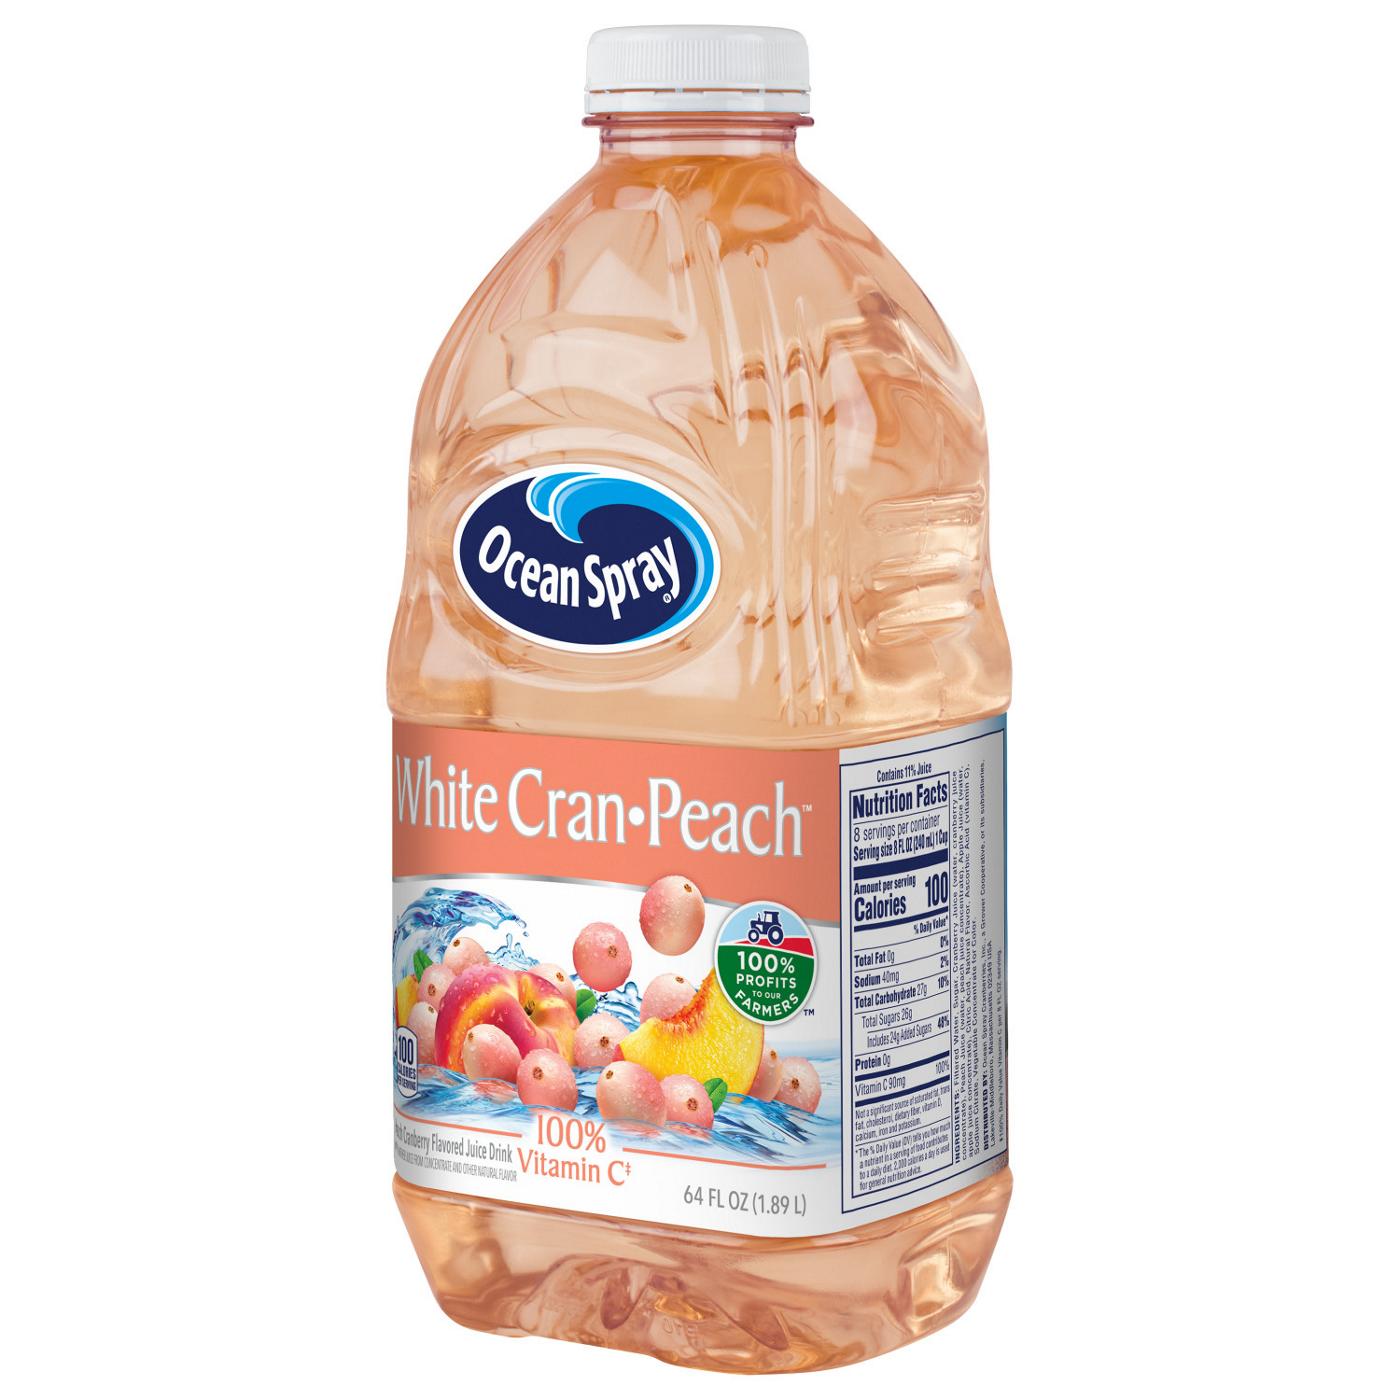 Ocean Spray Ocean Spray® White Cran-Peach Juice Drink, 64 Fl Oz Bottle; image 4 of 6